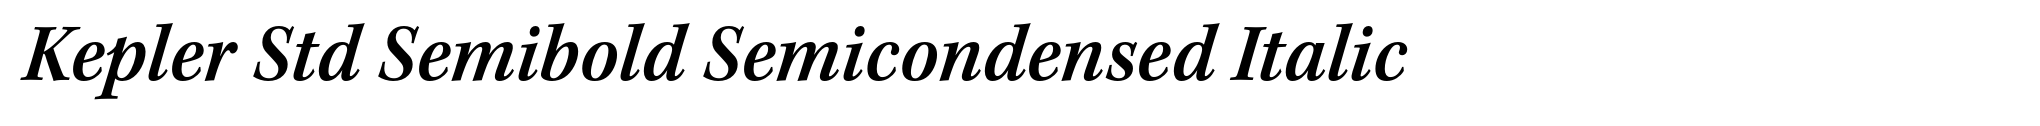 Kepler Std Semibold Semicondensed Italic image